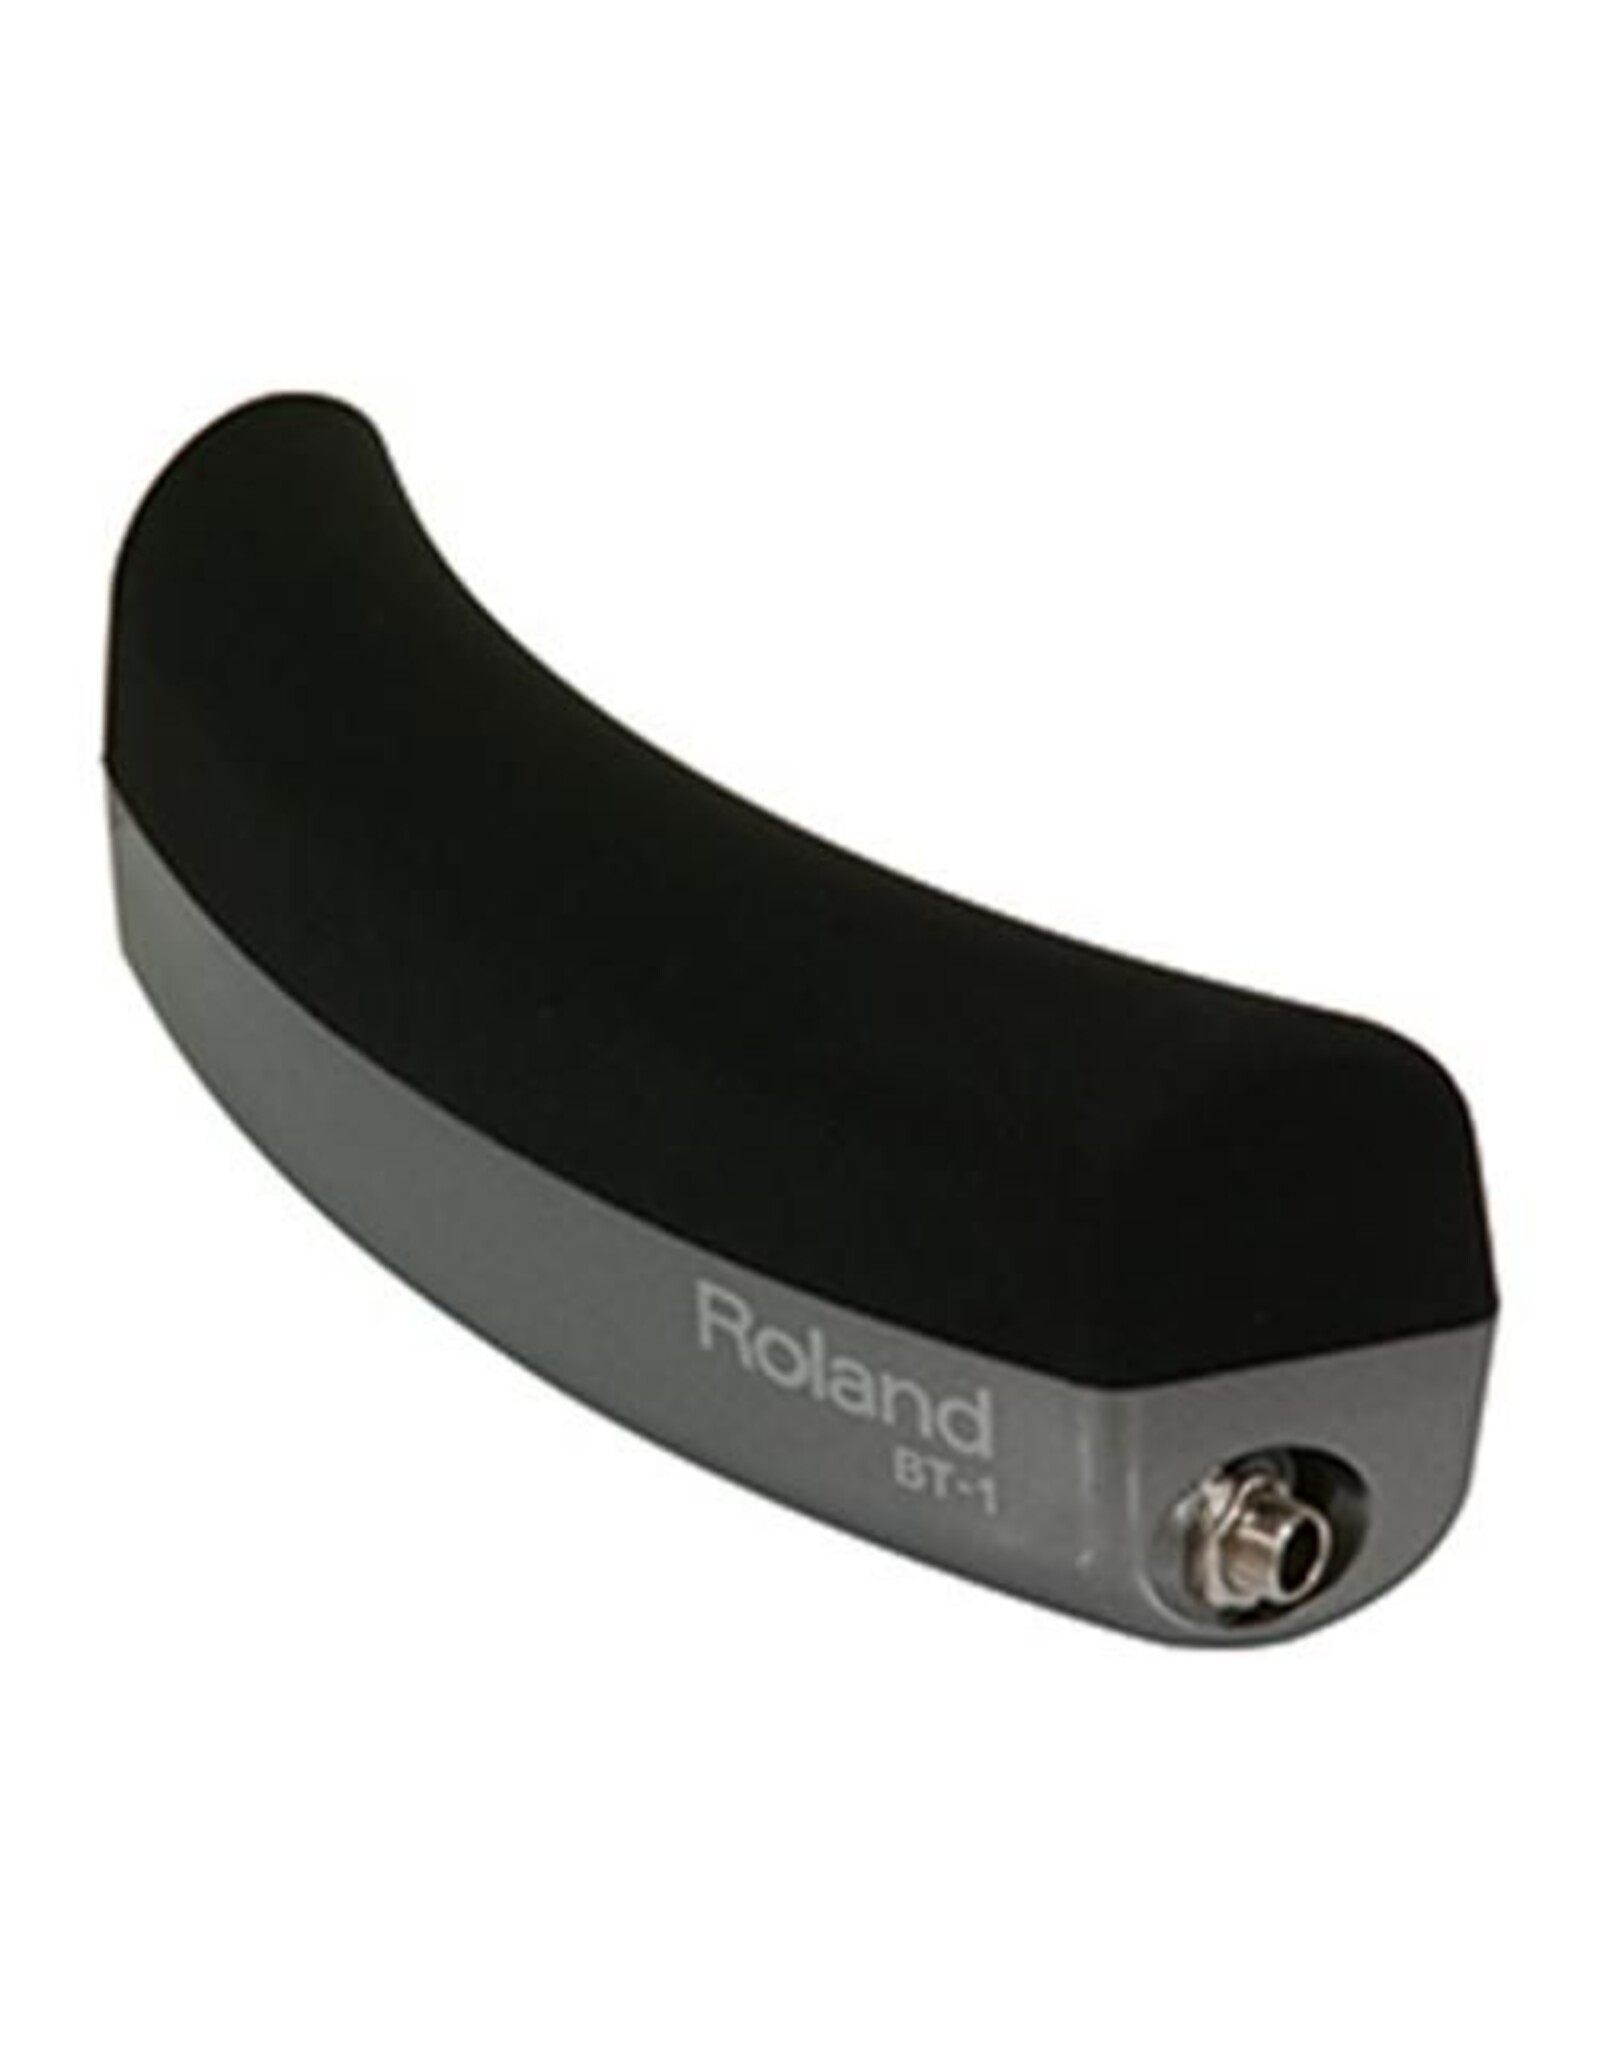 Roland BT-1 winkel demo bar trigger pad